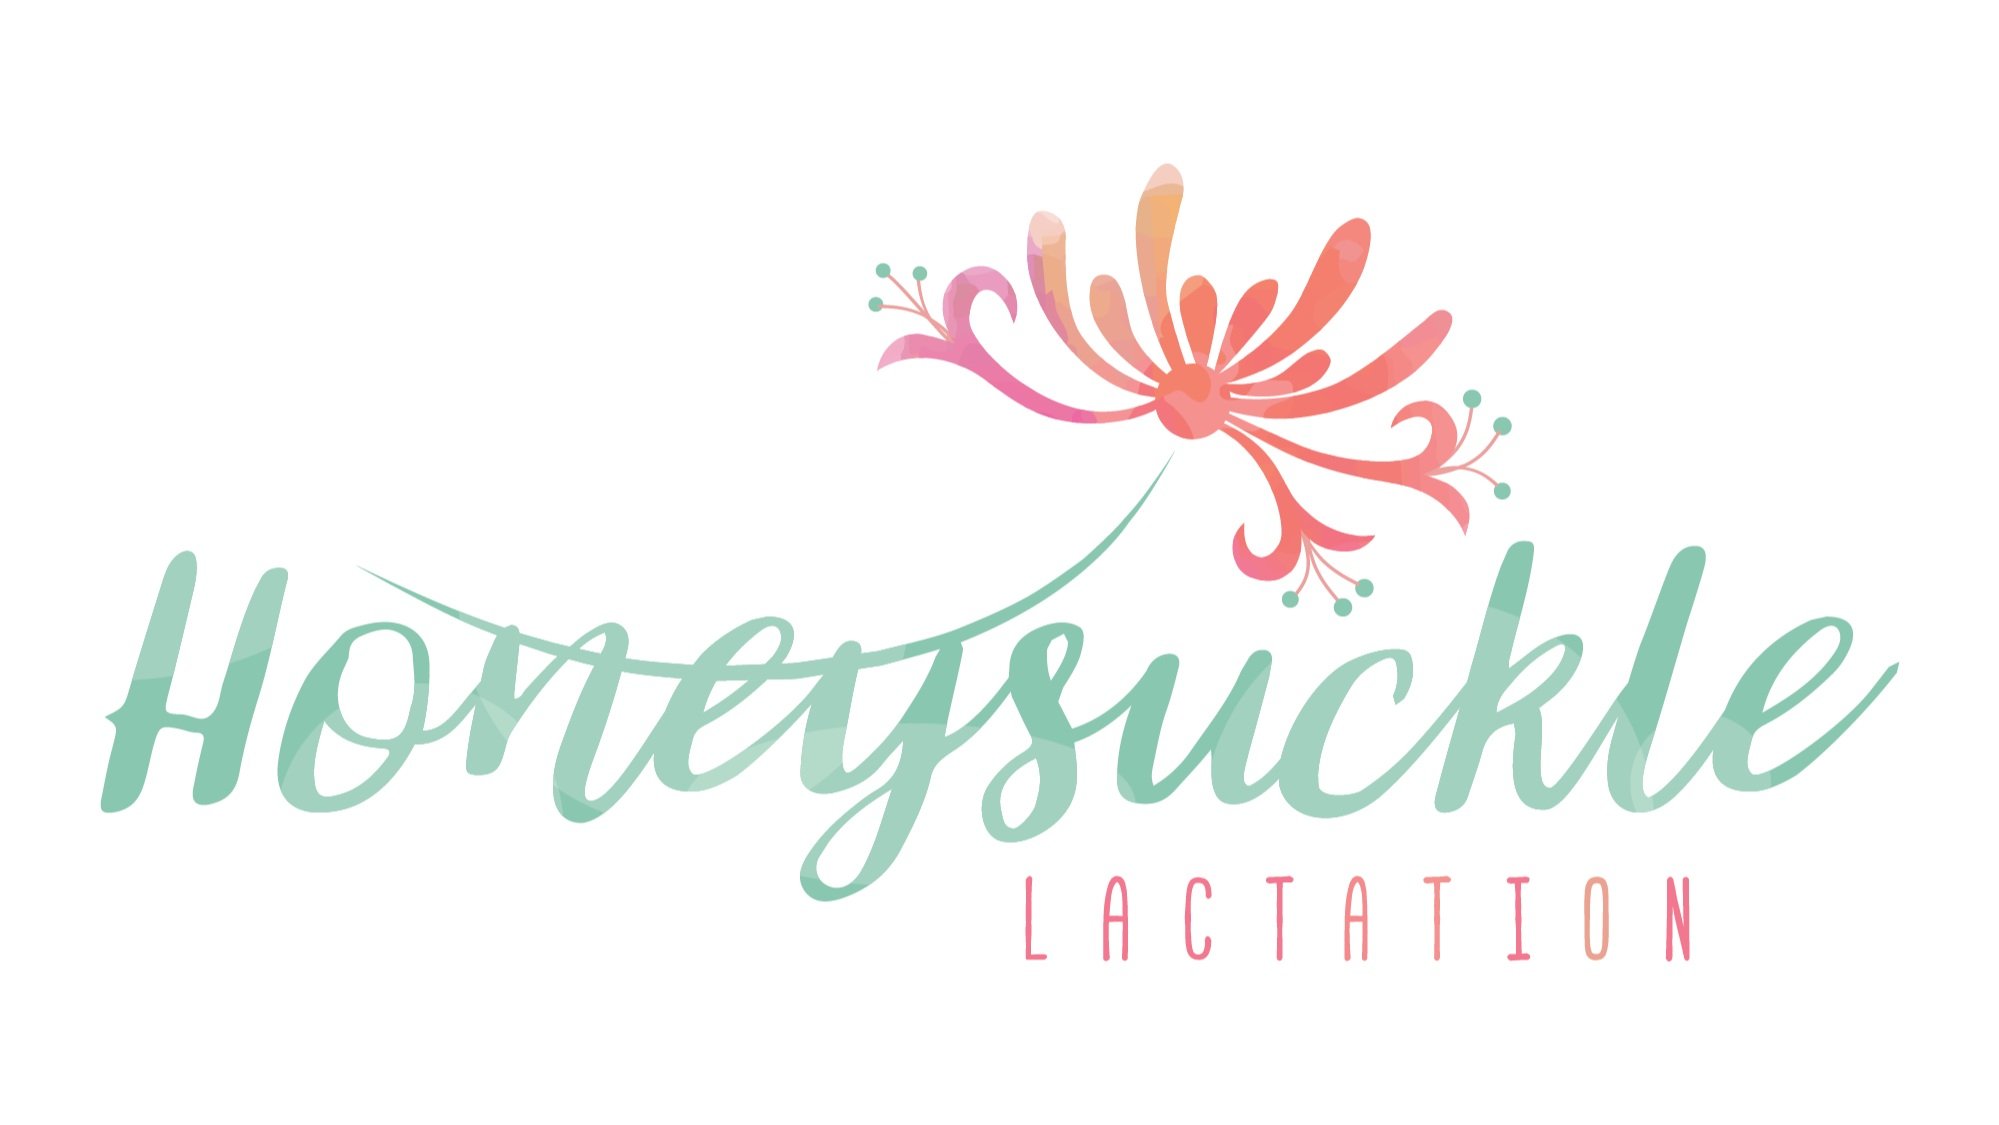 Honeysuckle Lactation